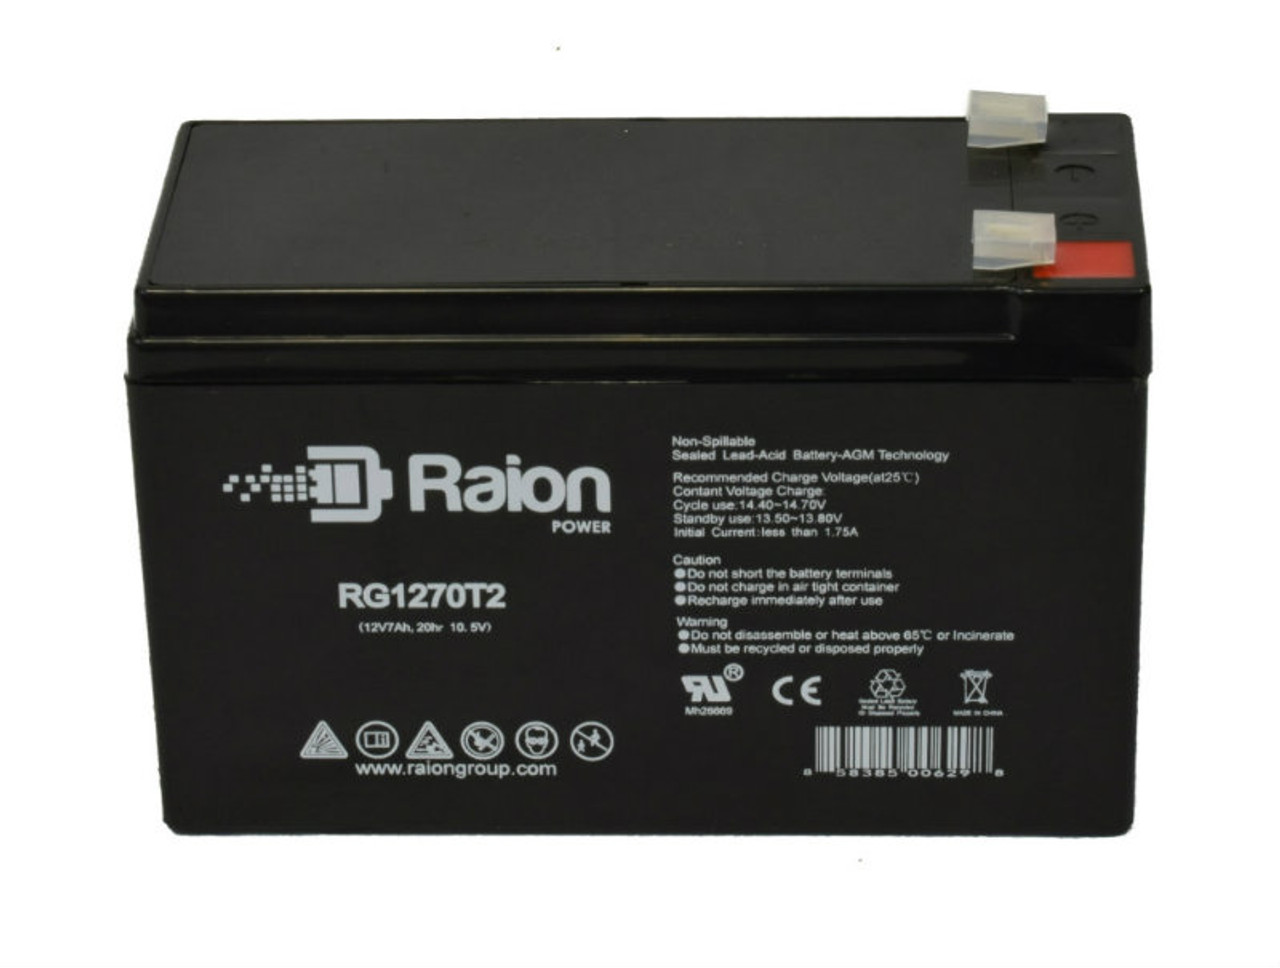 Raion Power RG1270T1 12V 7Ah Lead Acid Battery for Mortara ELI 280 Touchscreen ECG Recorder